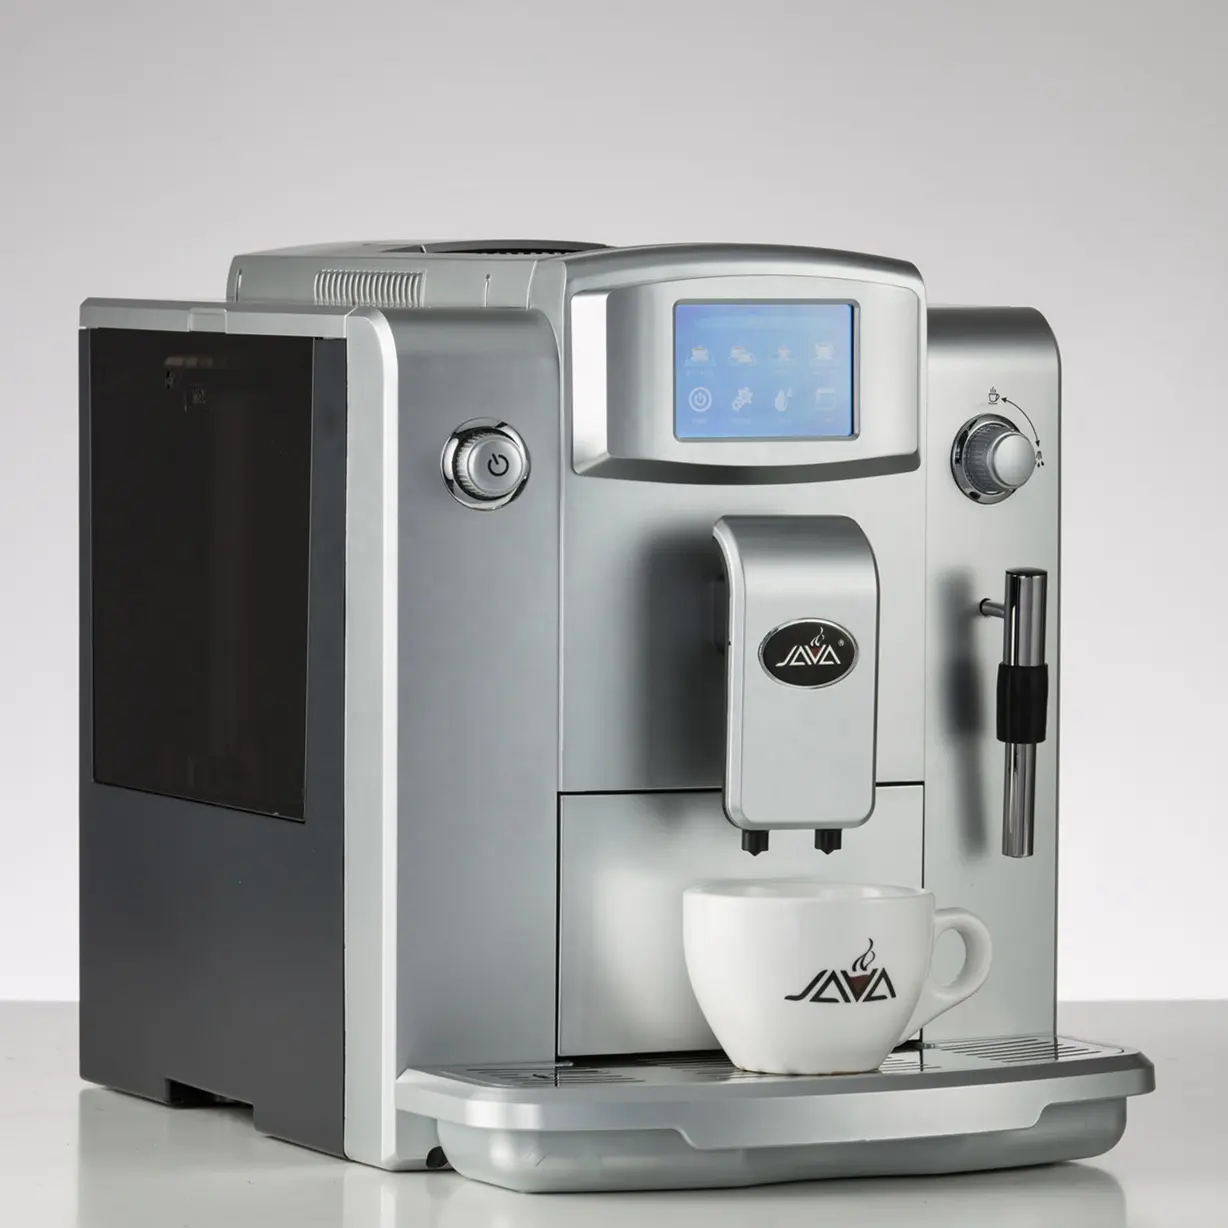 İtalyan espresso kahve makinesi ticari tam otomatik lüks cappuccino makinesi kahve makinesi otomatik